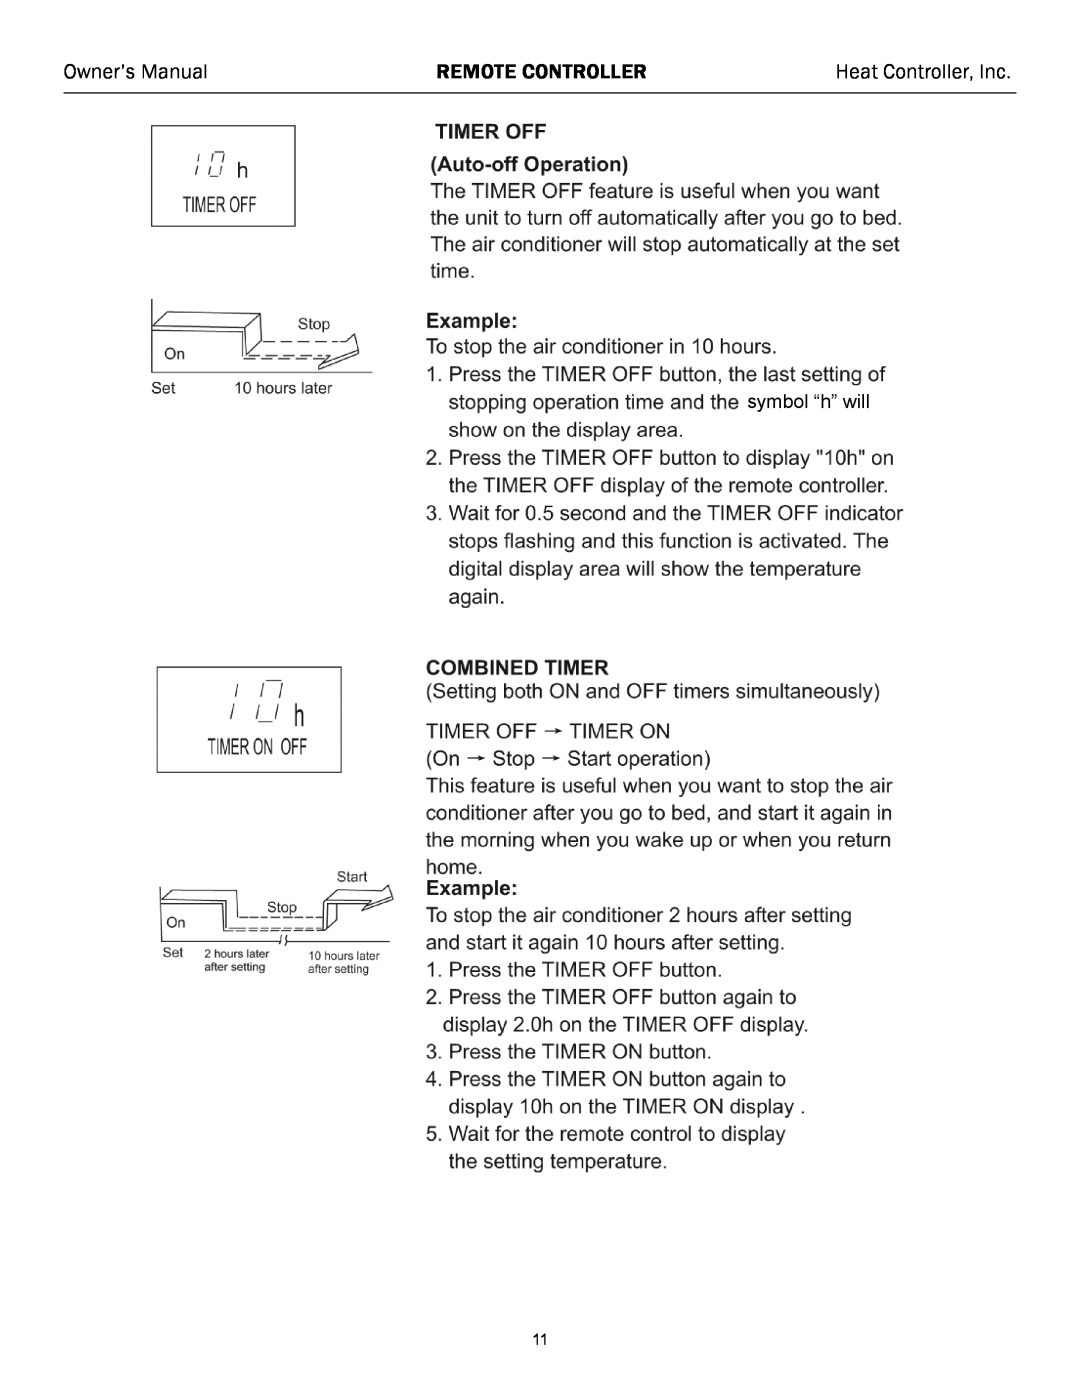 Heat Controller B-SMA/SMH09/12/18SC, R51L9/BG(C)E Owner’s Manual, Remote Controller, Heat Controller, Inc, symbol “h” will 